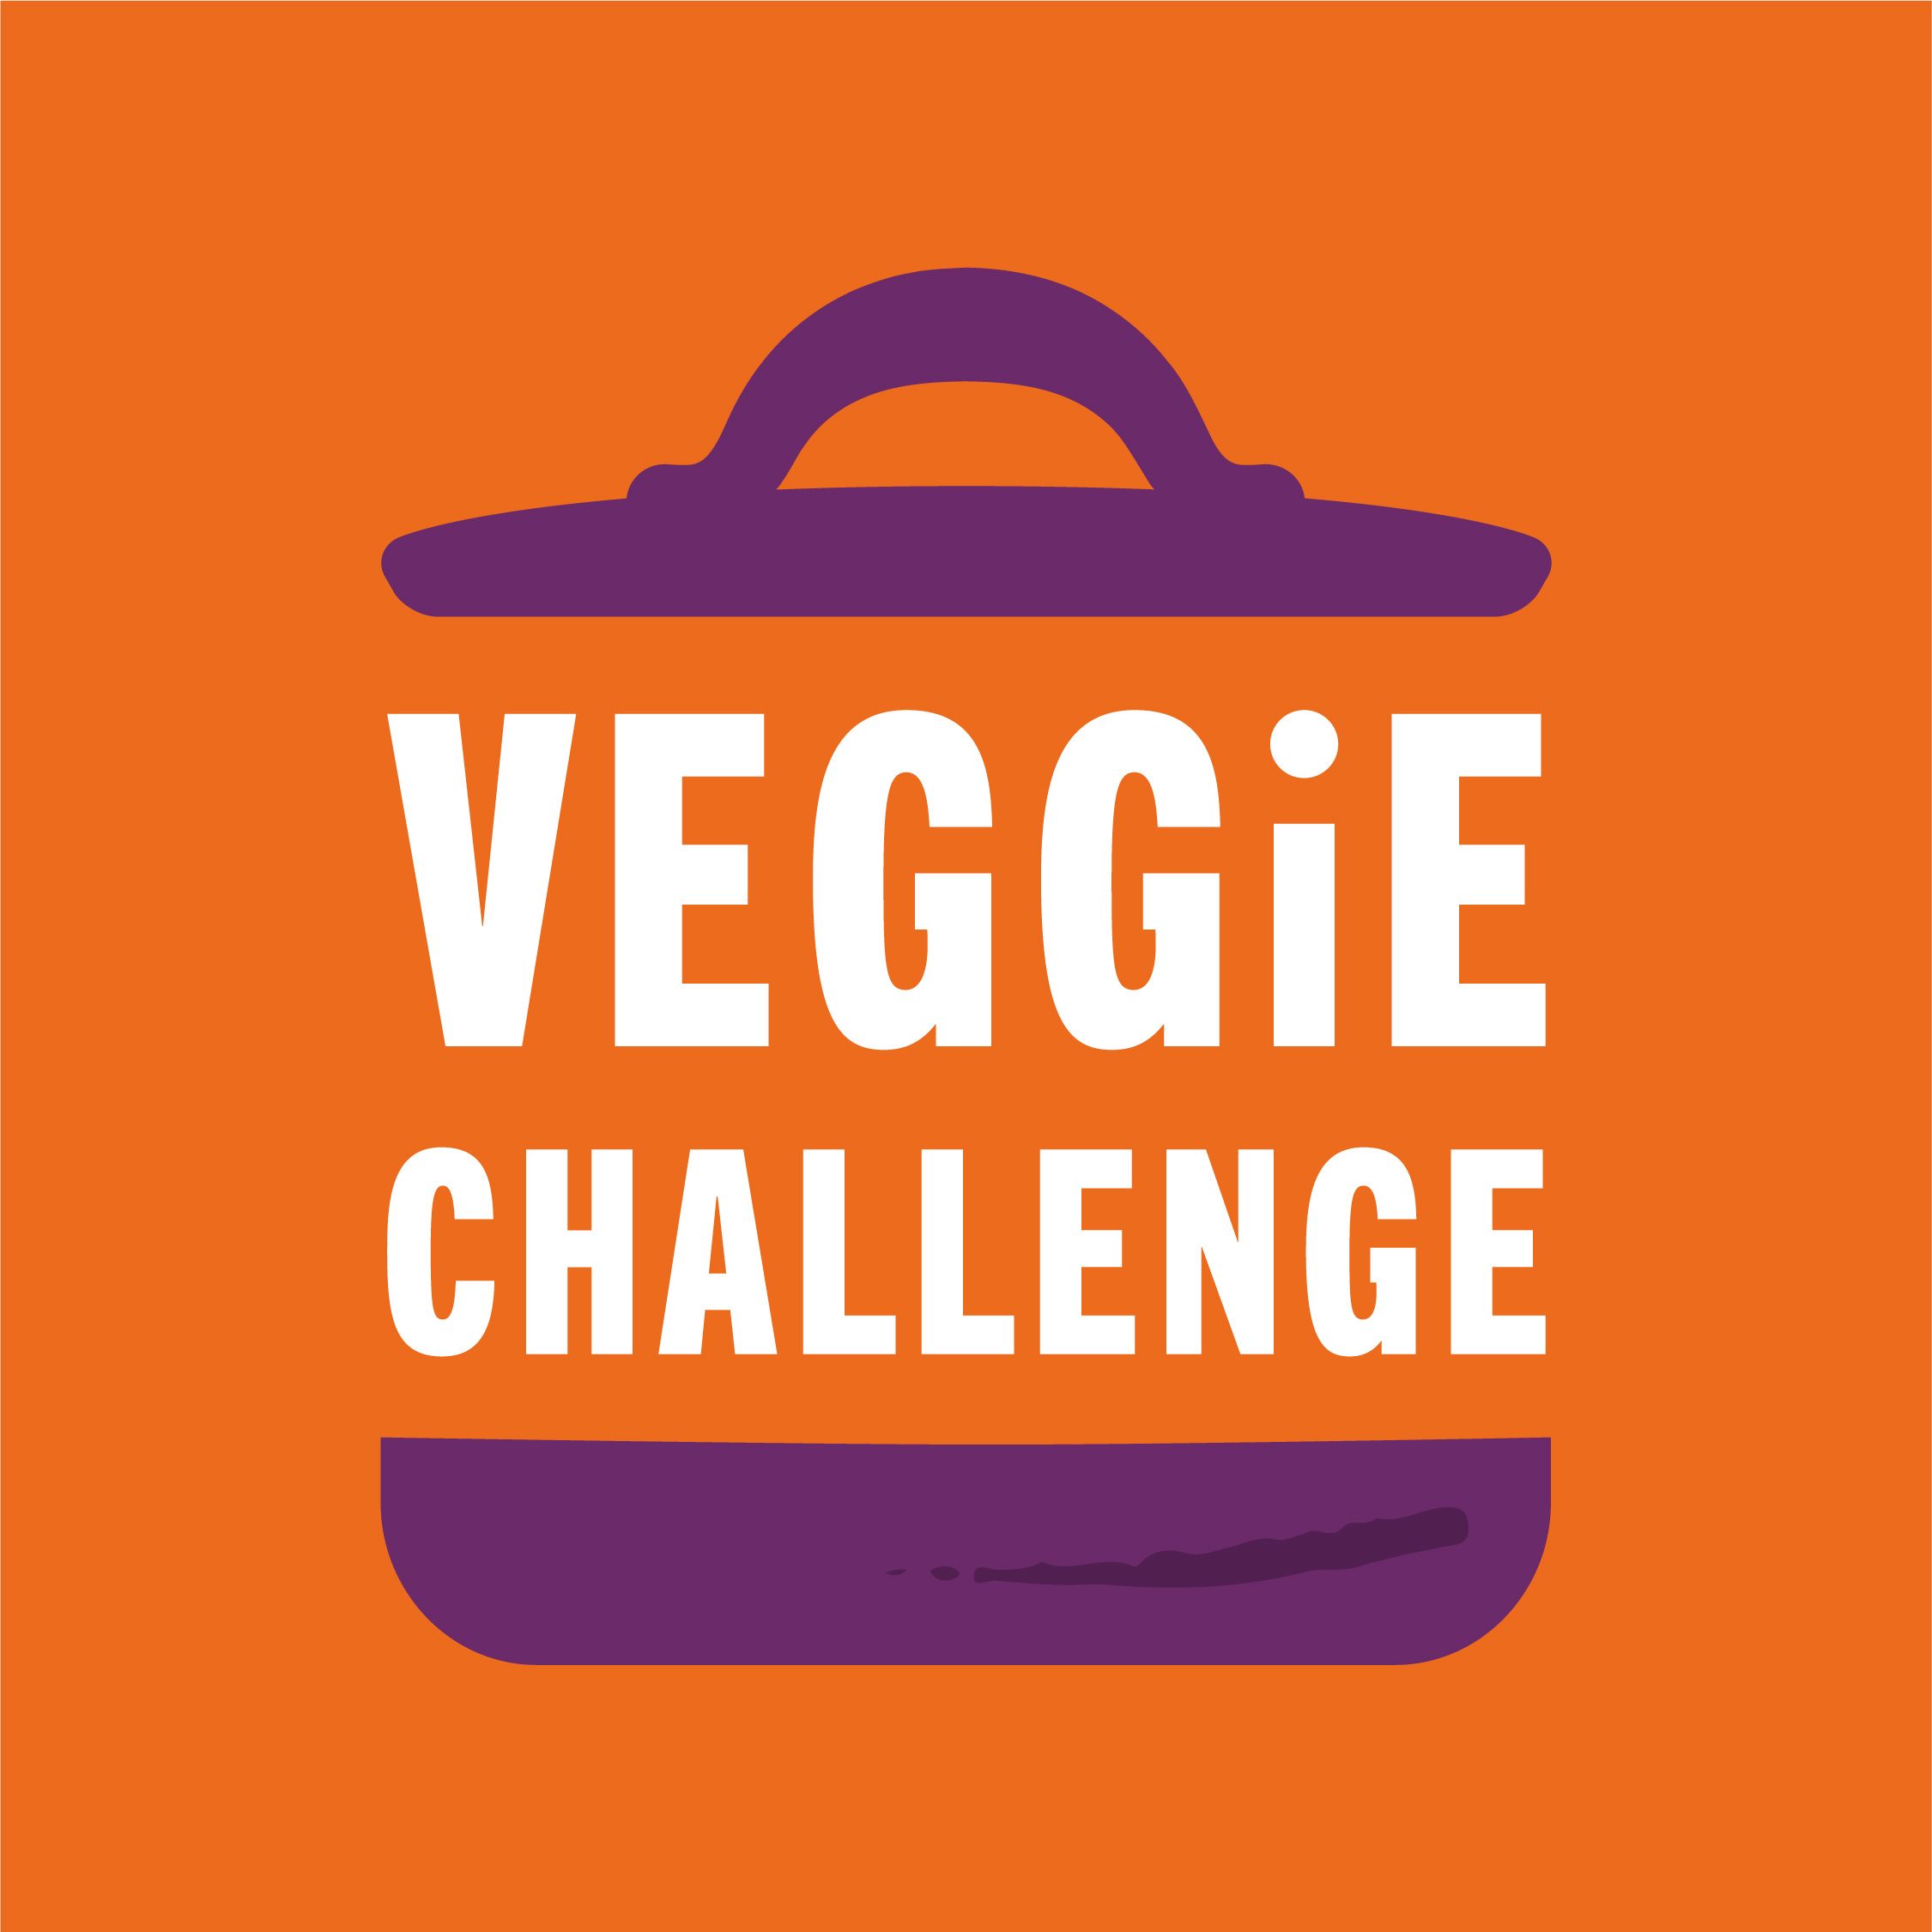 veggie challenge logo